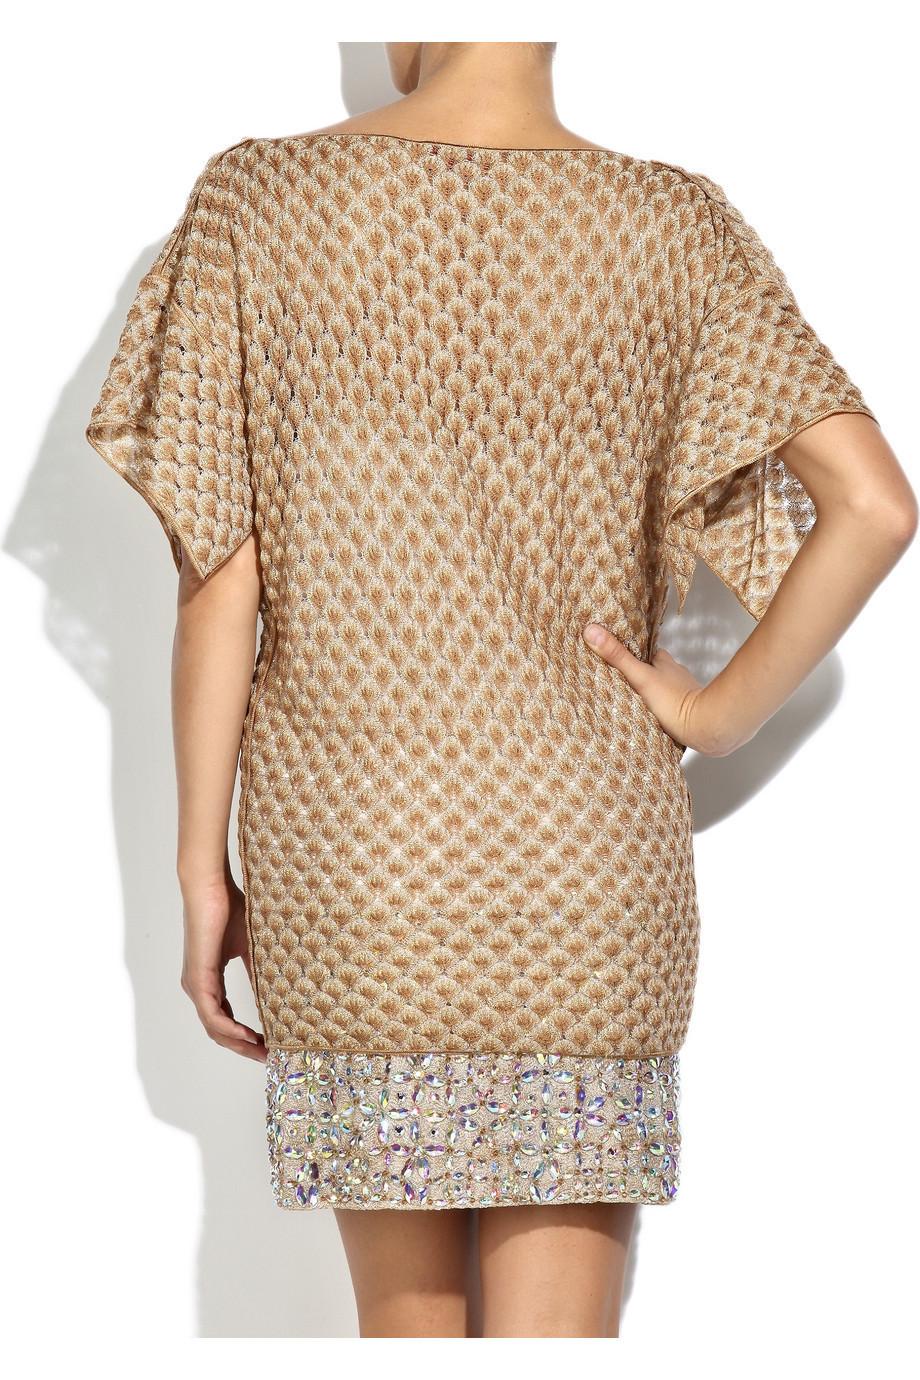 NEW Missoni Gold Metallic Crochet Knit Beaded Crystal Dress 42 Pour femmes en vente